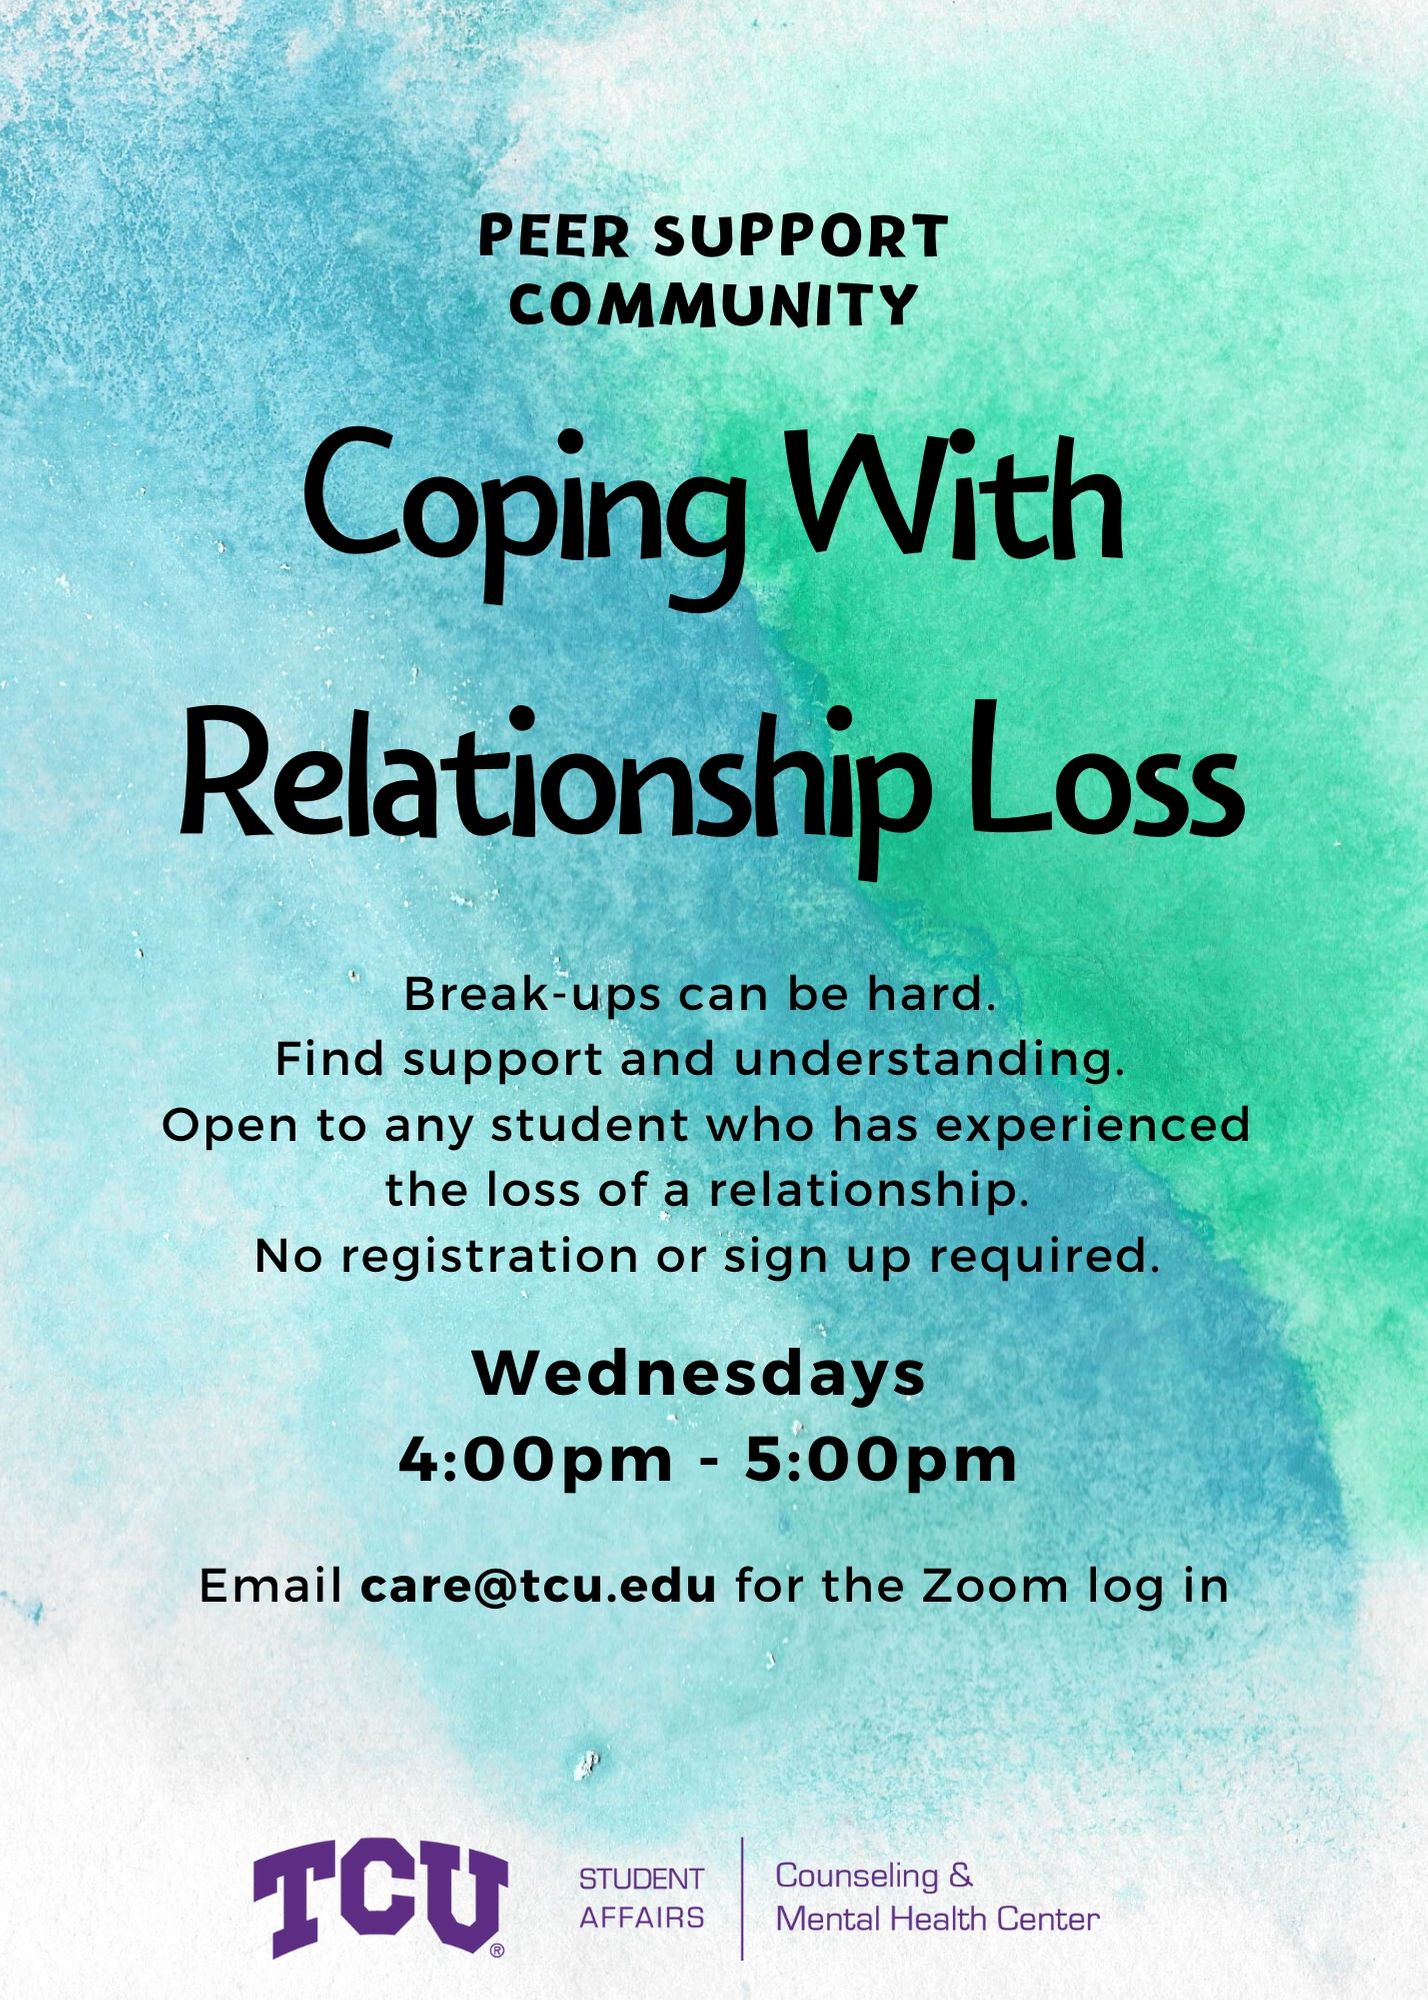 Relationship Loss Community flyer